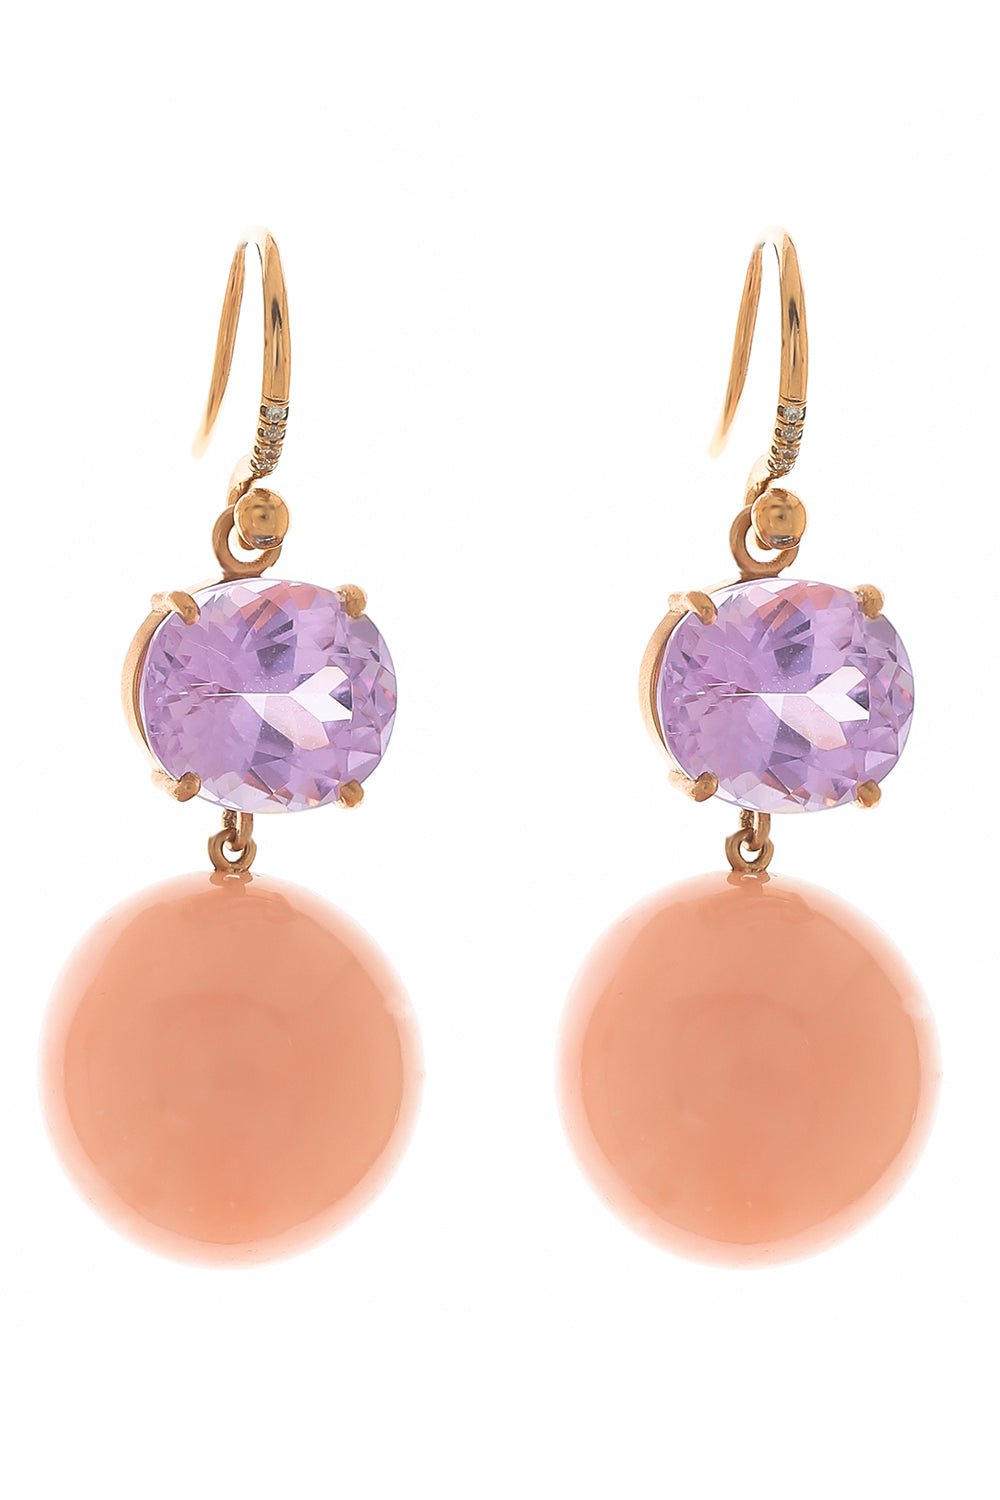 IRENE NEUWIRTH JEWELRY-Kunzite Pink Opal Earrings-ROSE GOLD